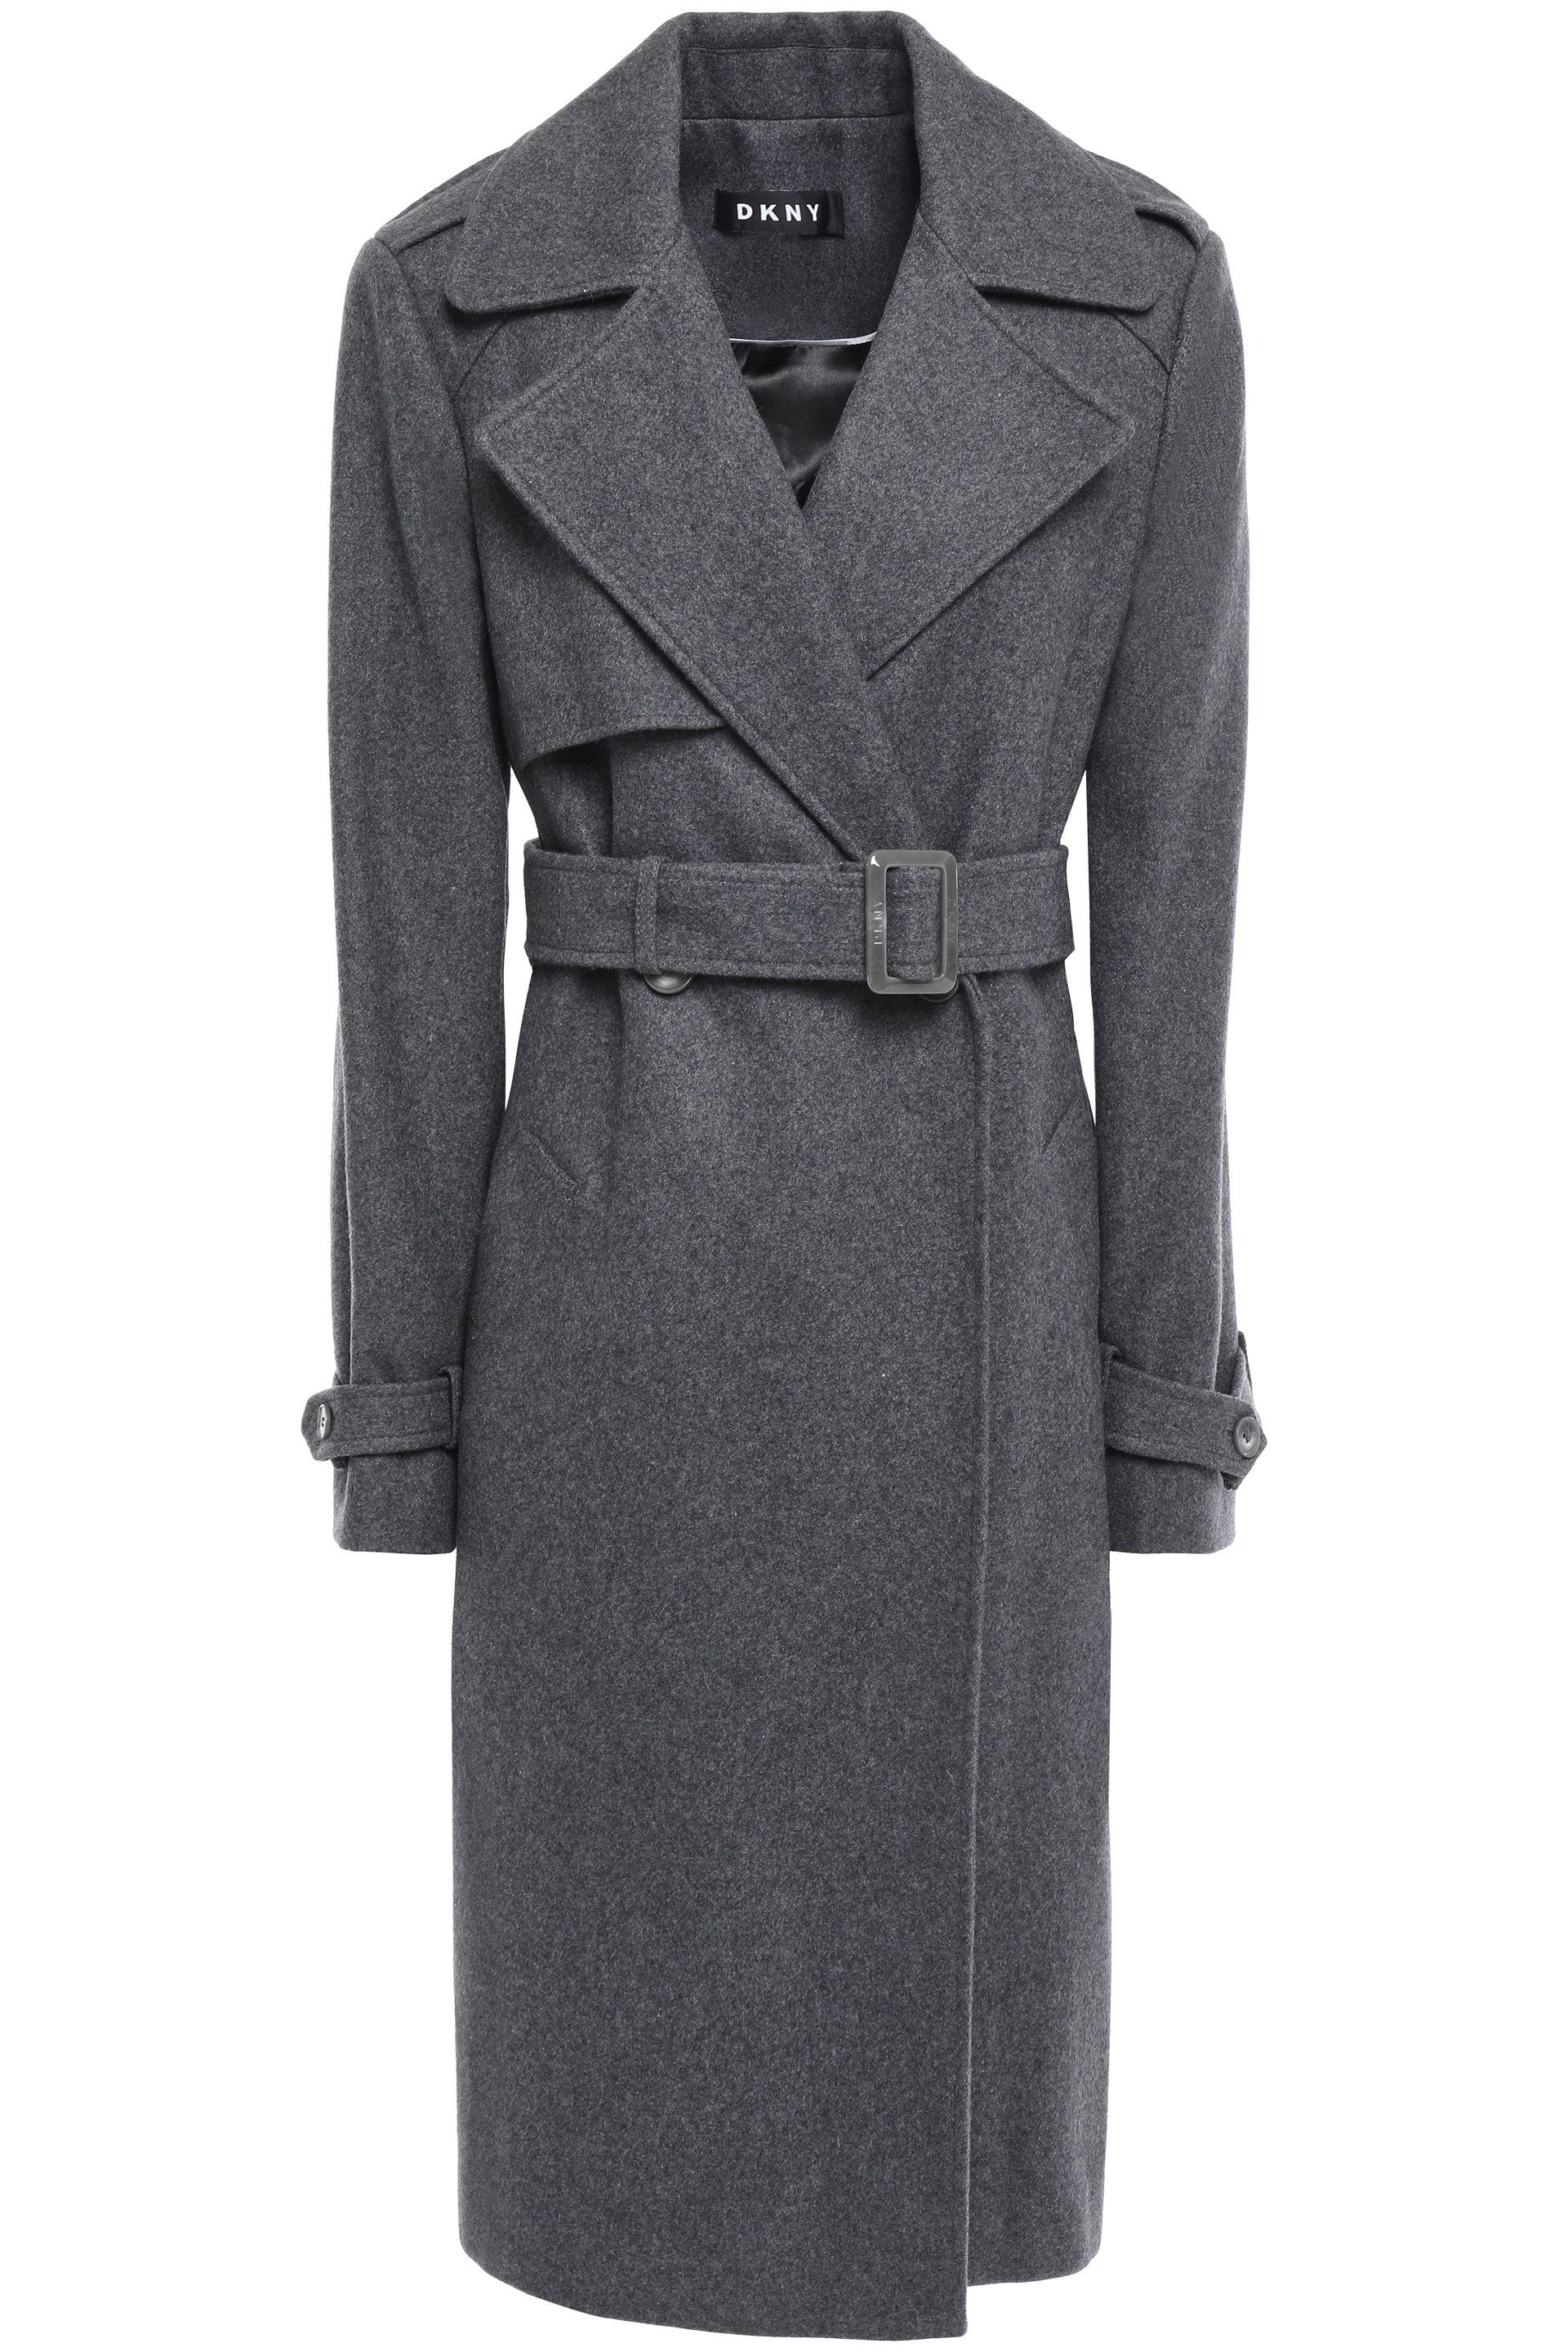 DKNY Wool-blend Felt Trench Coat Charcoal in Gray - Lyst